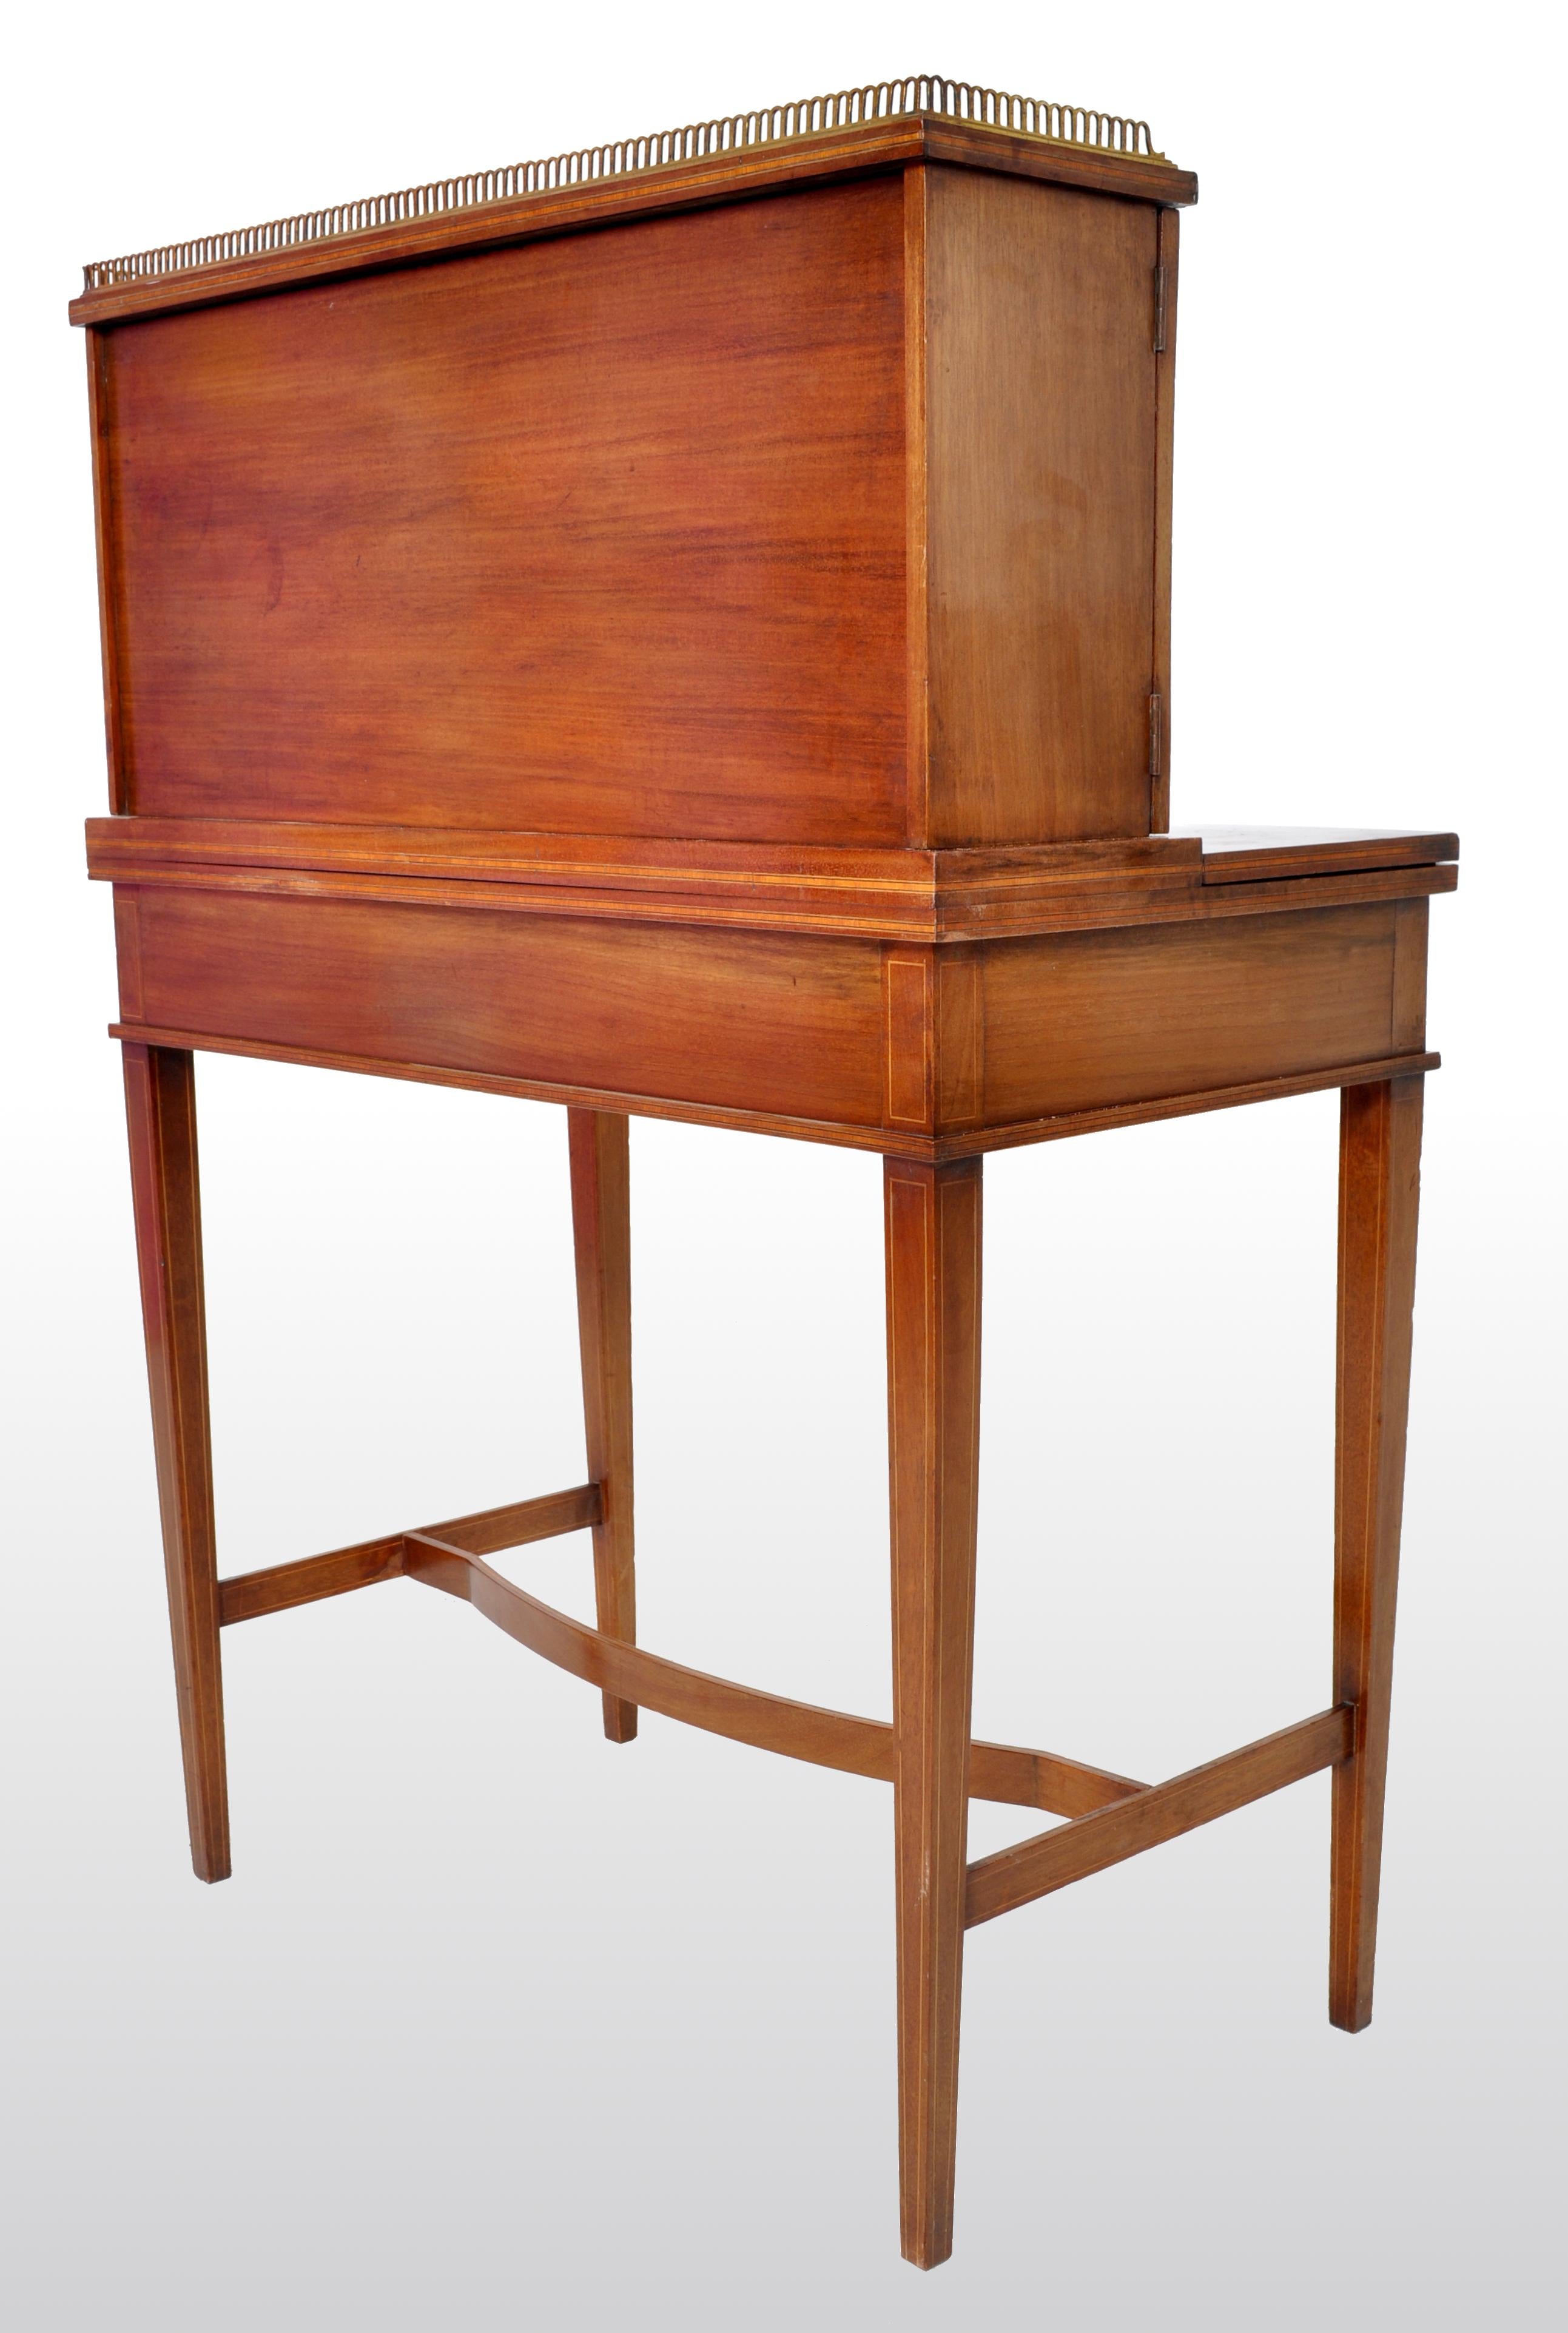 Antique Sheraton Revival Inlaid Mahogany Desk / Writing Table, circa 1895 11